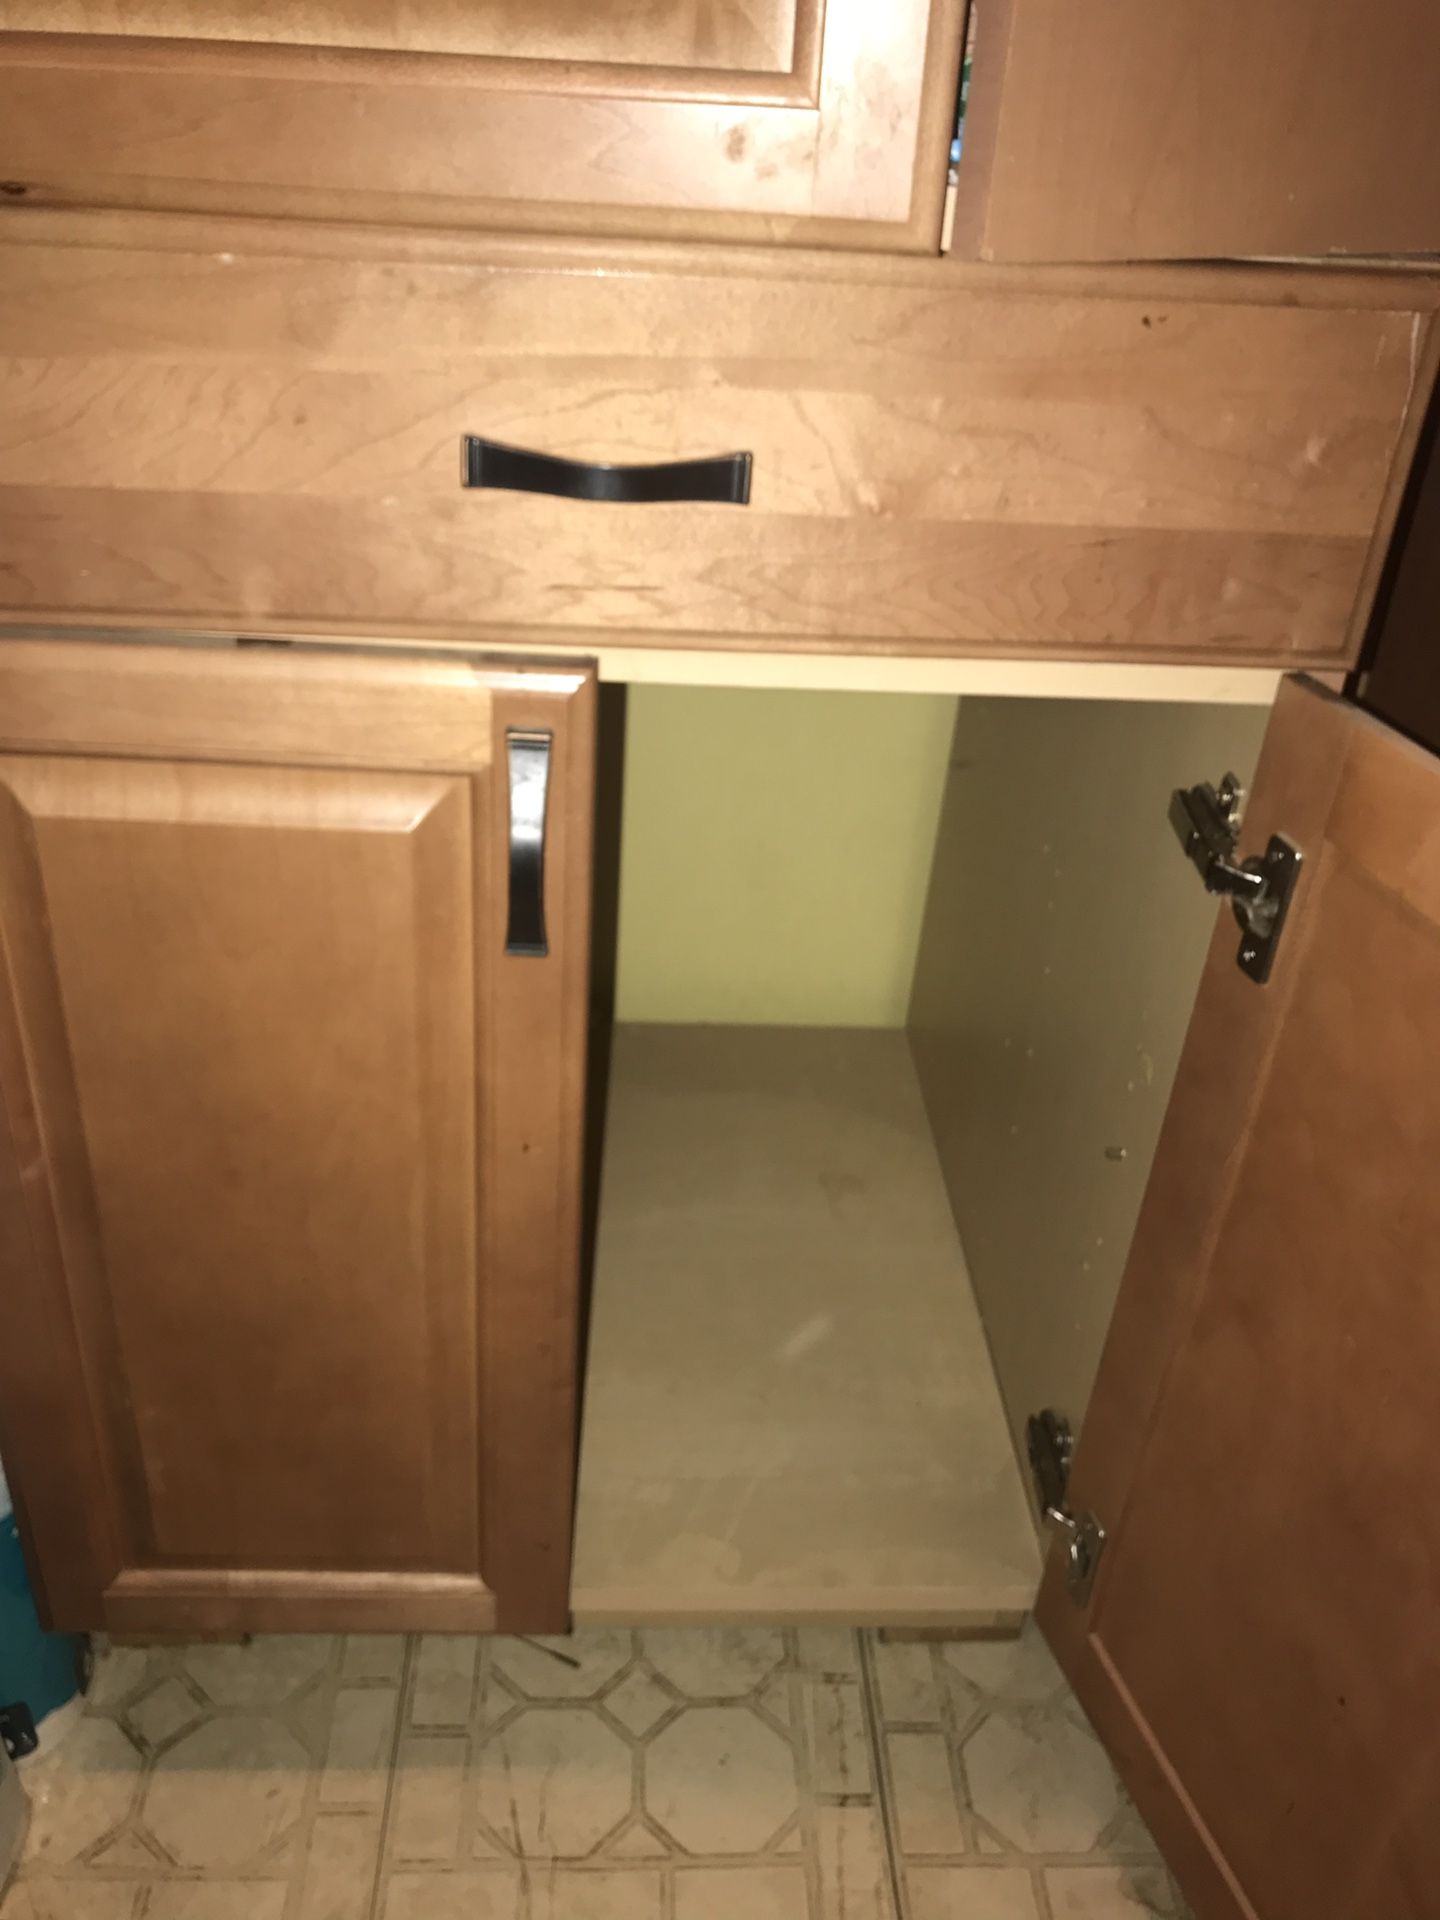 Cabinets w/o shelves